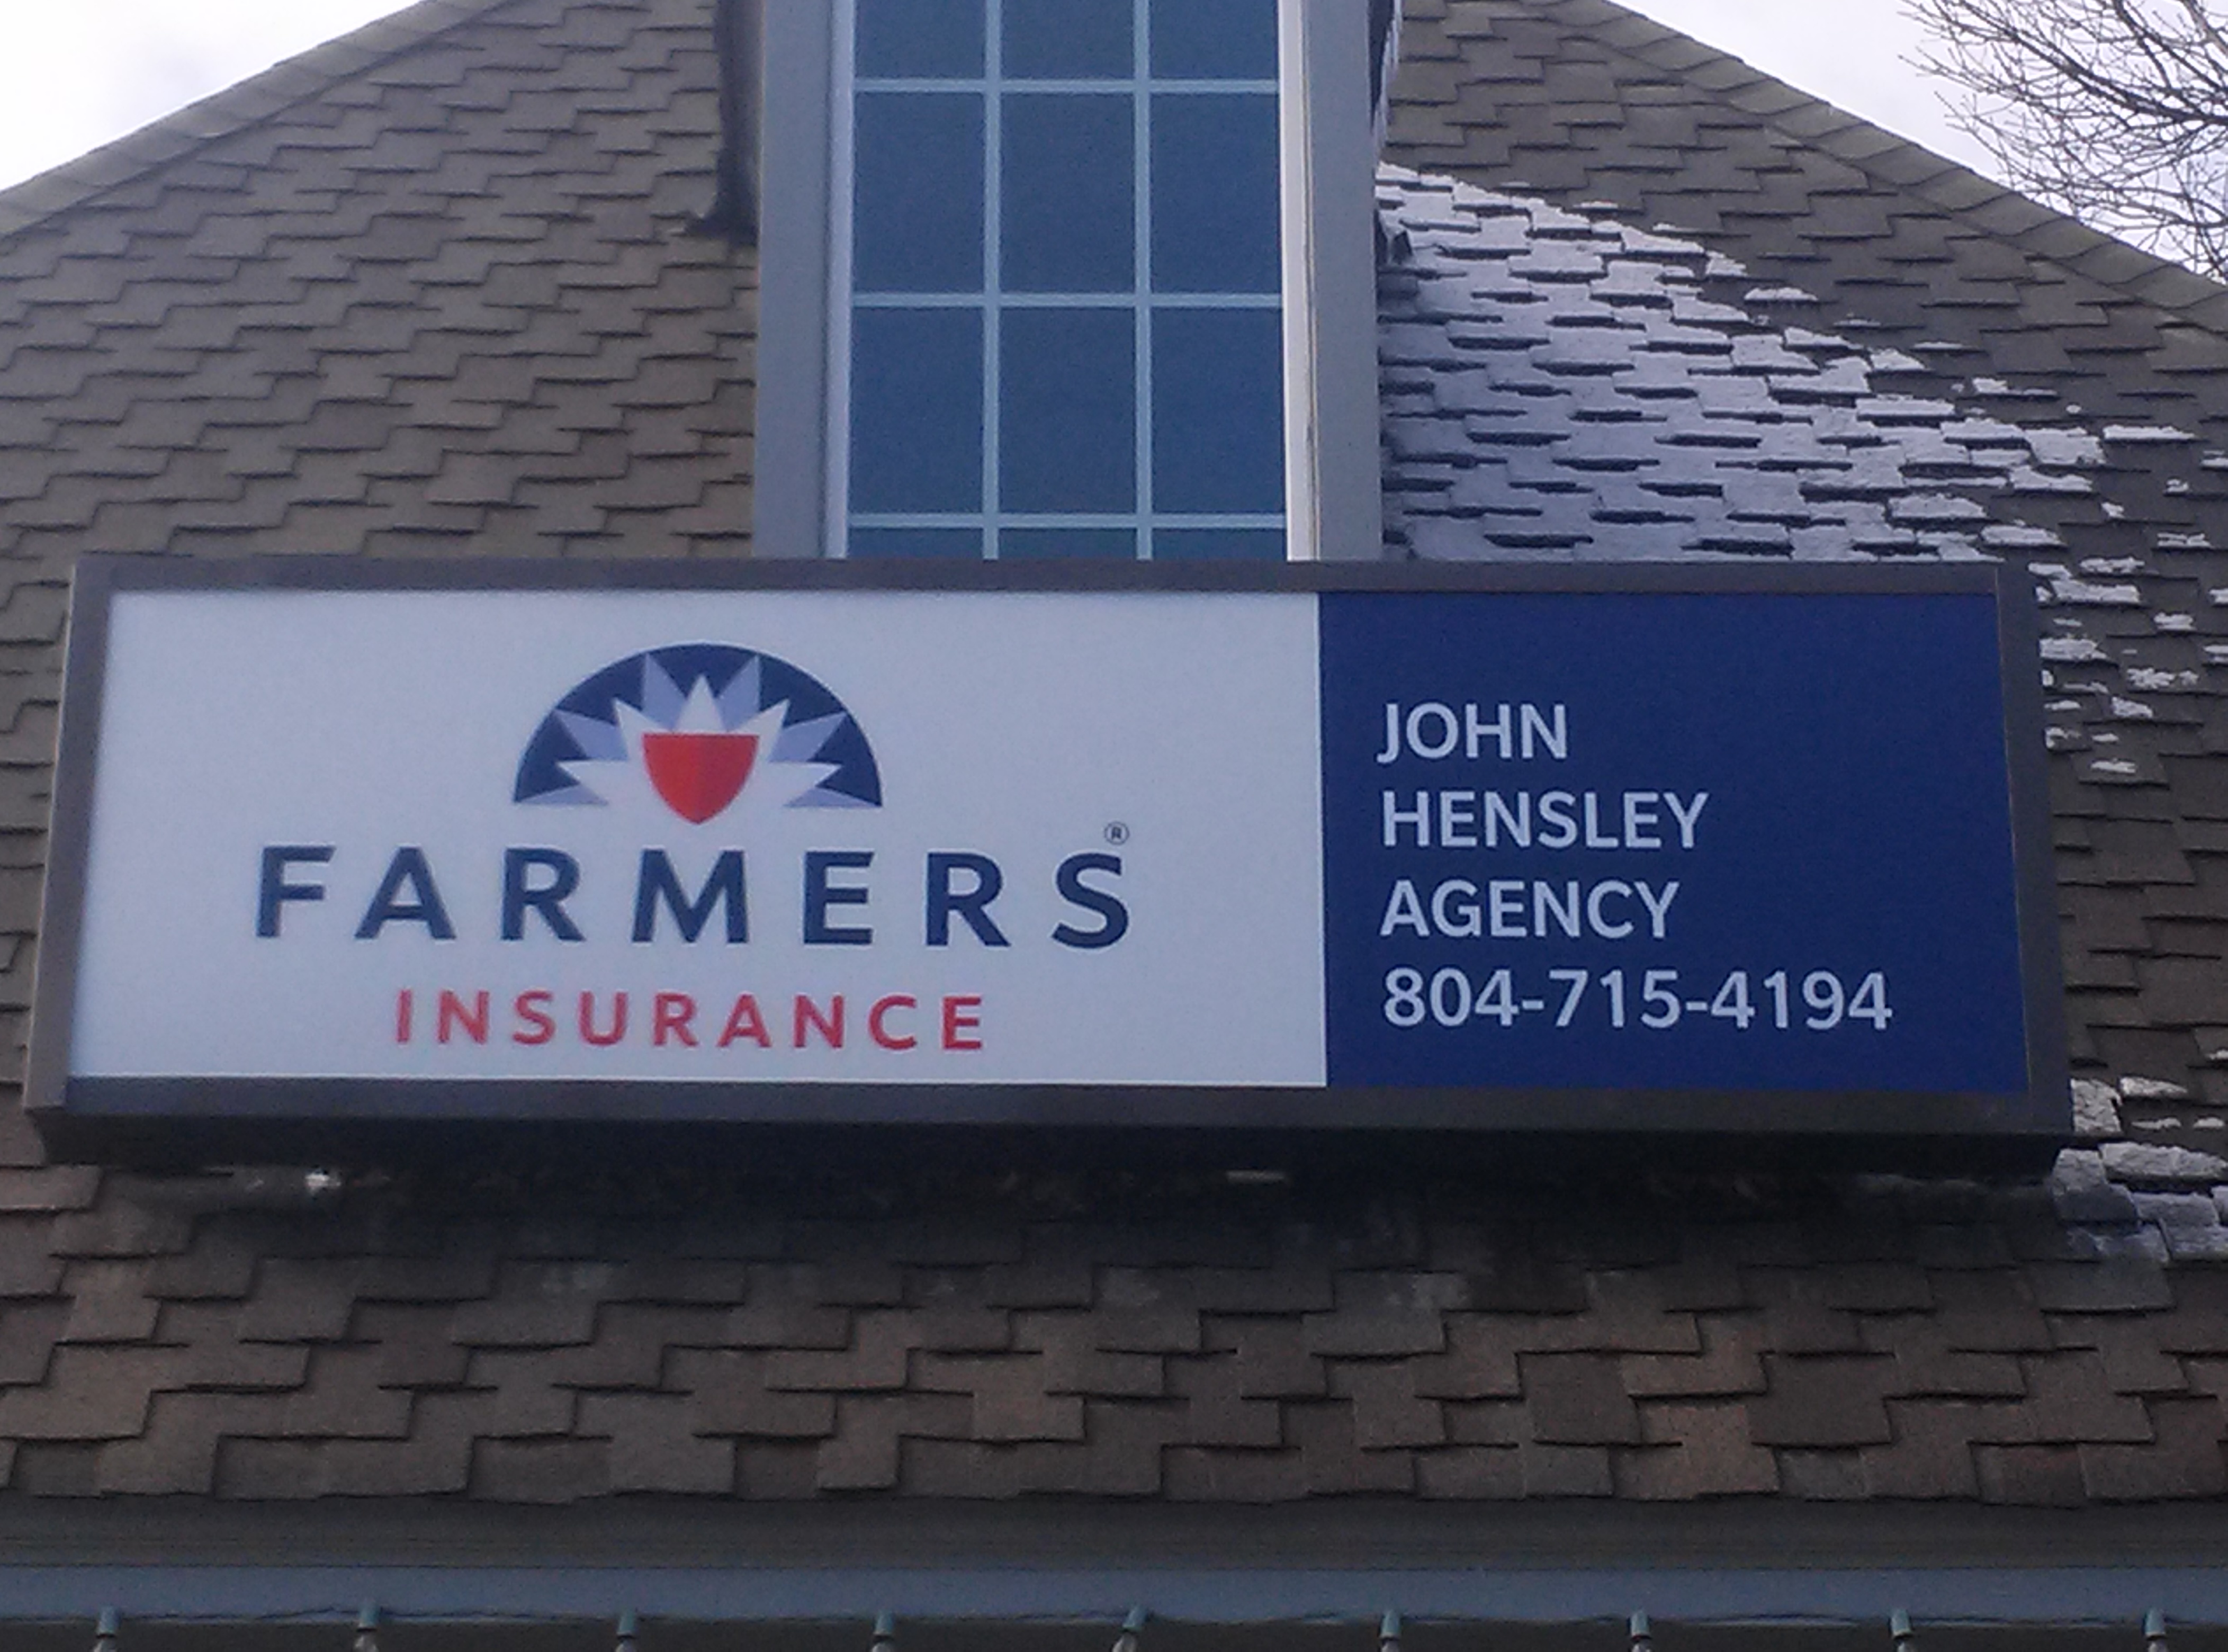 Farmers Insurance - John Hensley Photo